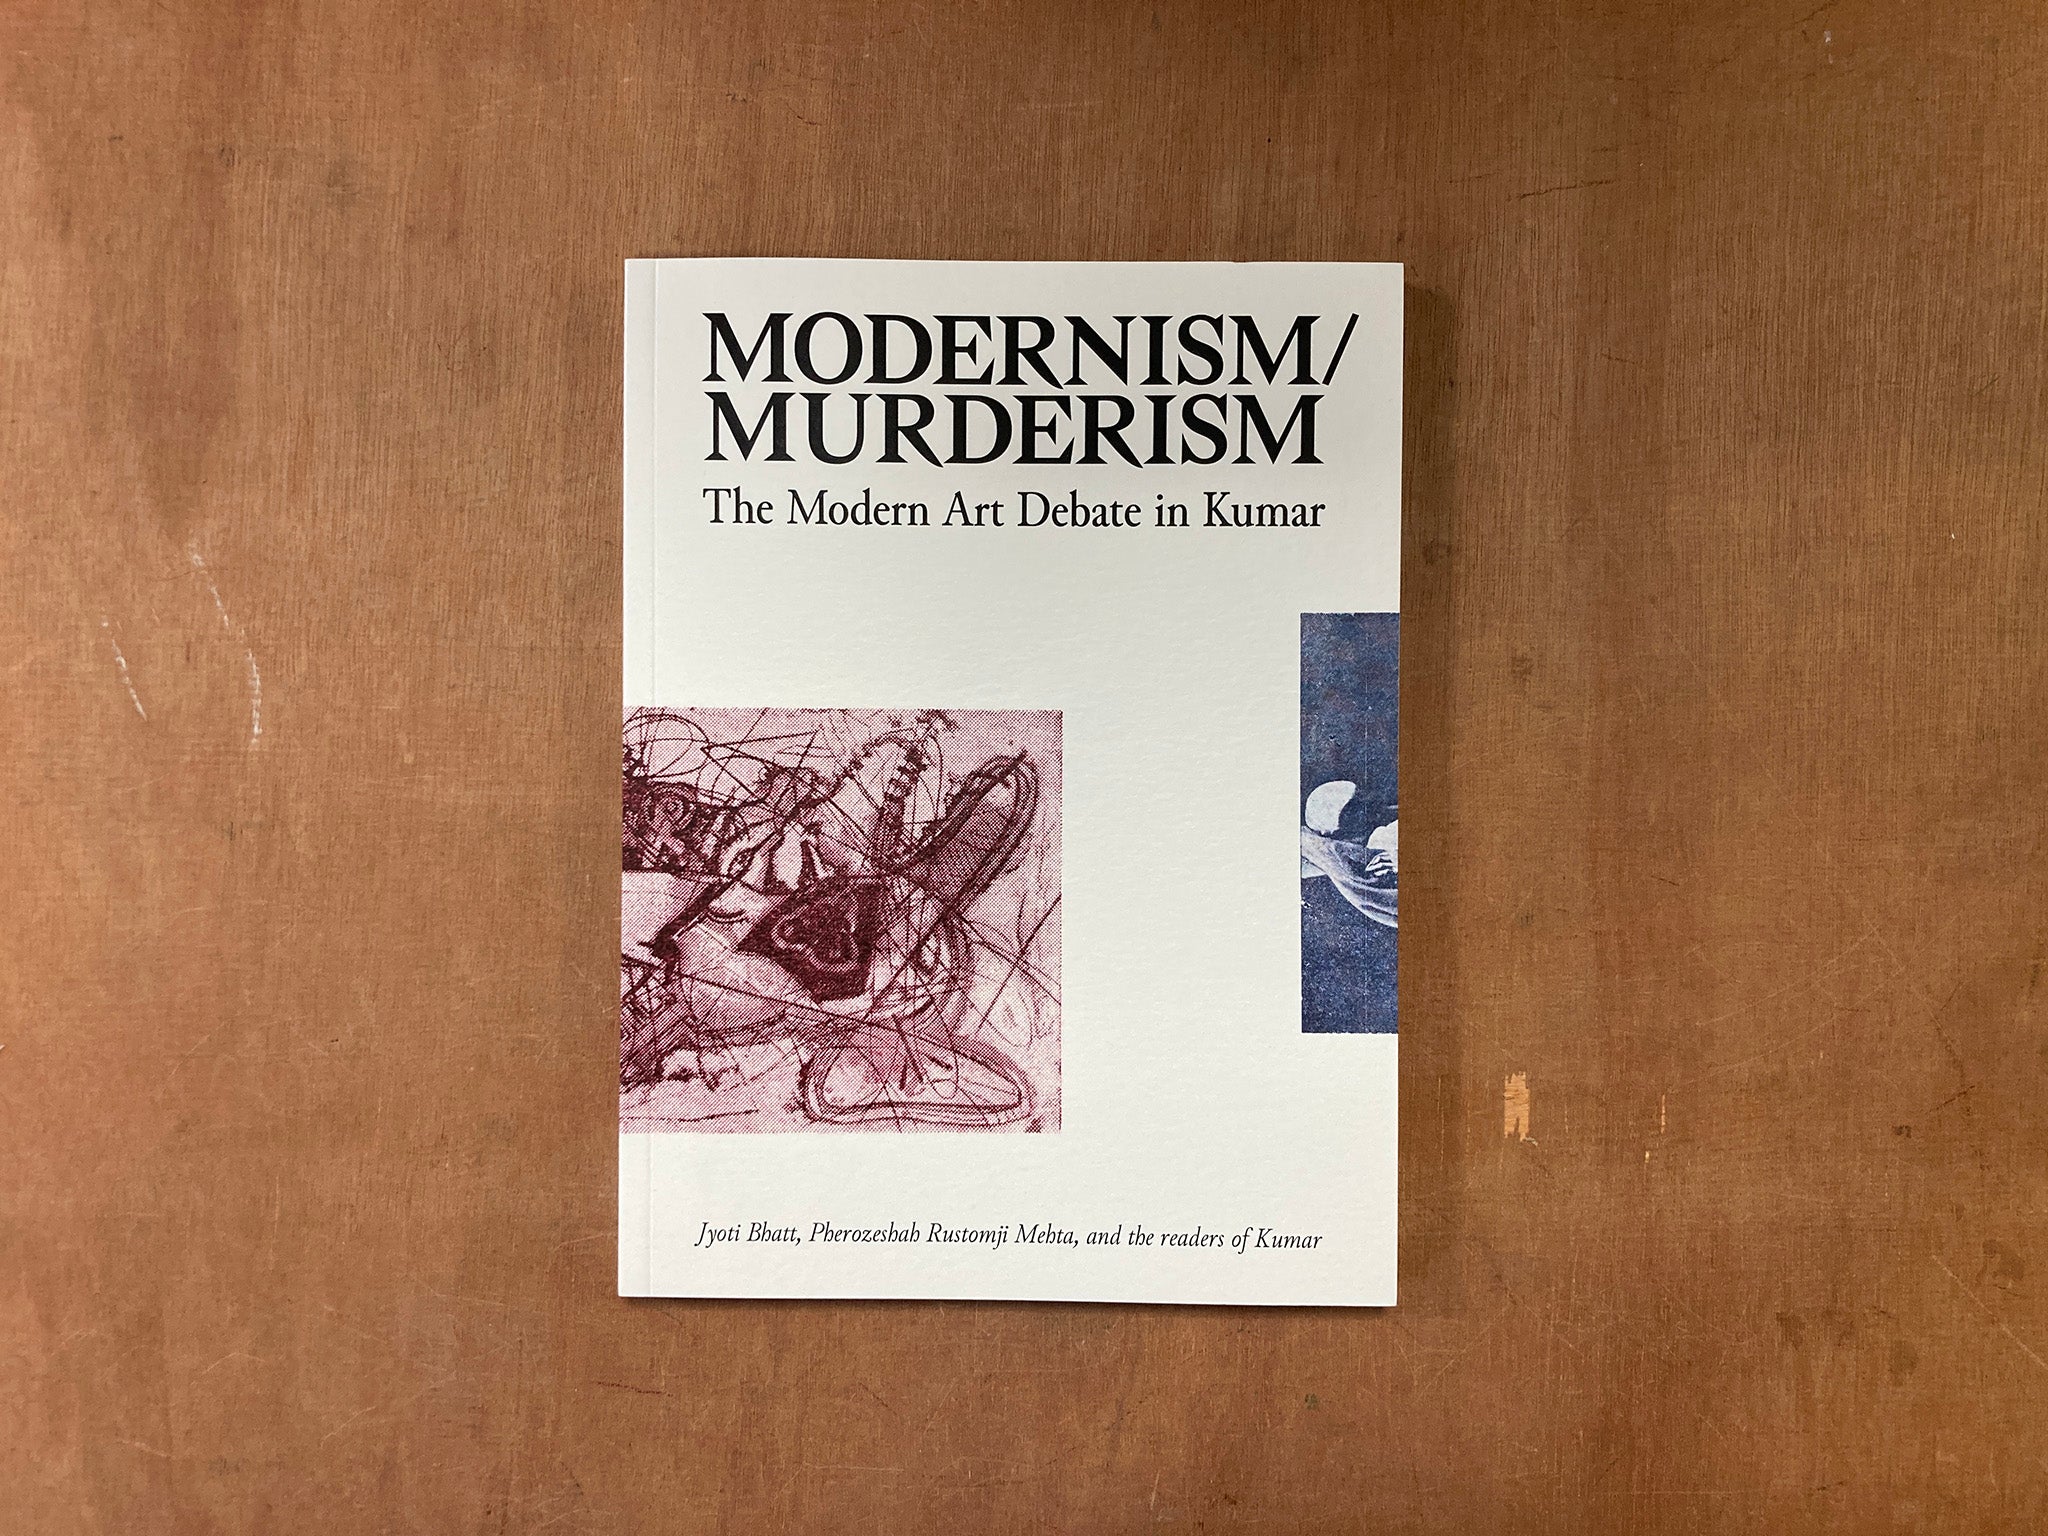 MODERNISM/MURDERISM: THE MODERN ART DEBATE IN KUMAR by Jyoti Bhatt, Pherozeshah Rustomji Mehta, and the readers of Kumar